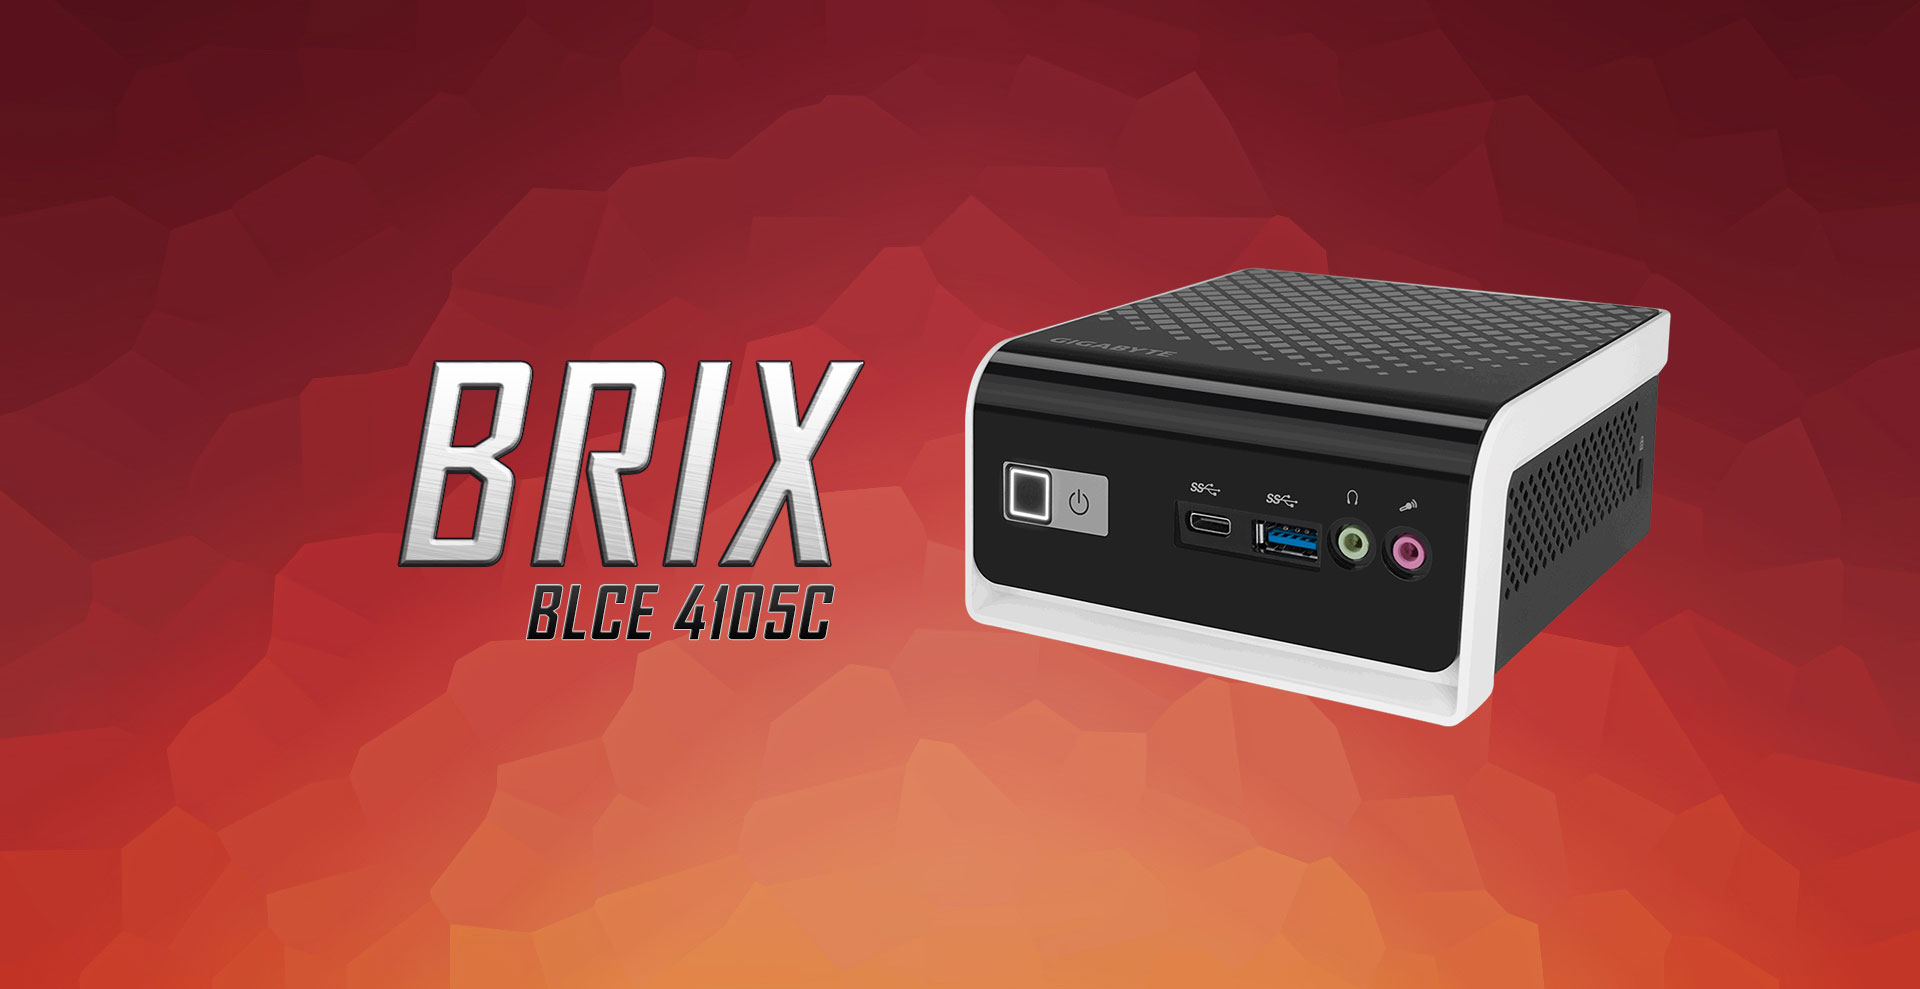 Brix Celeron BLCE 4105C Mini PC